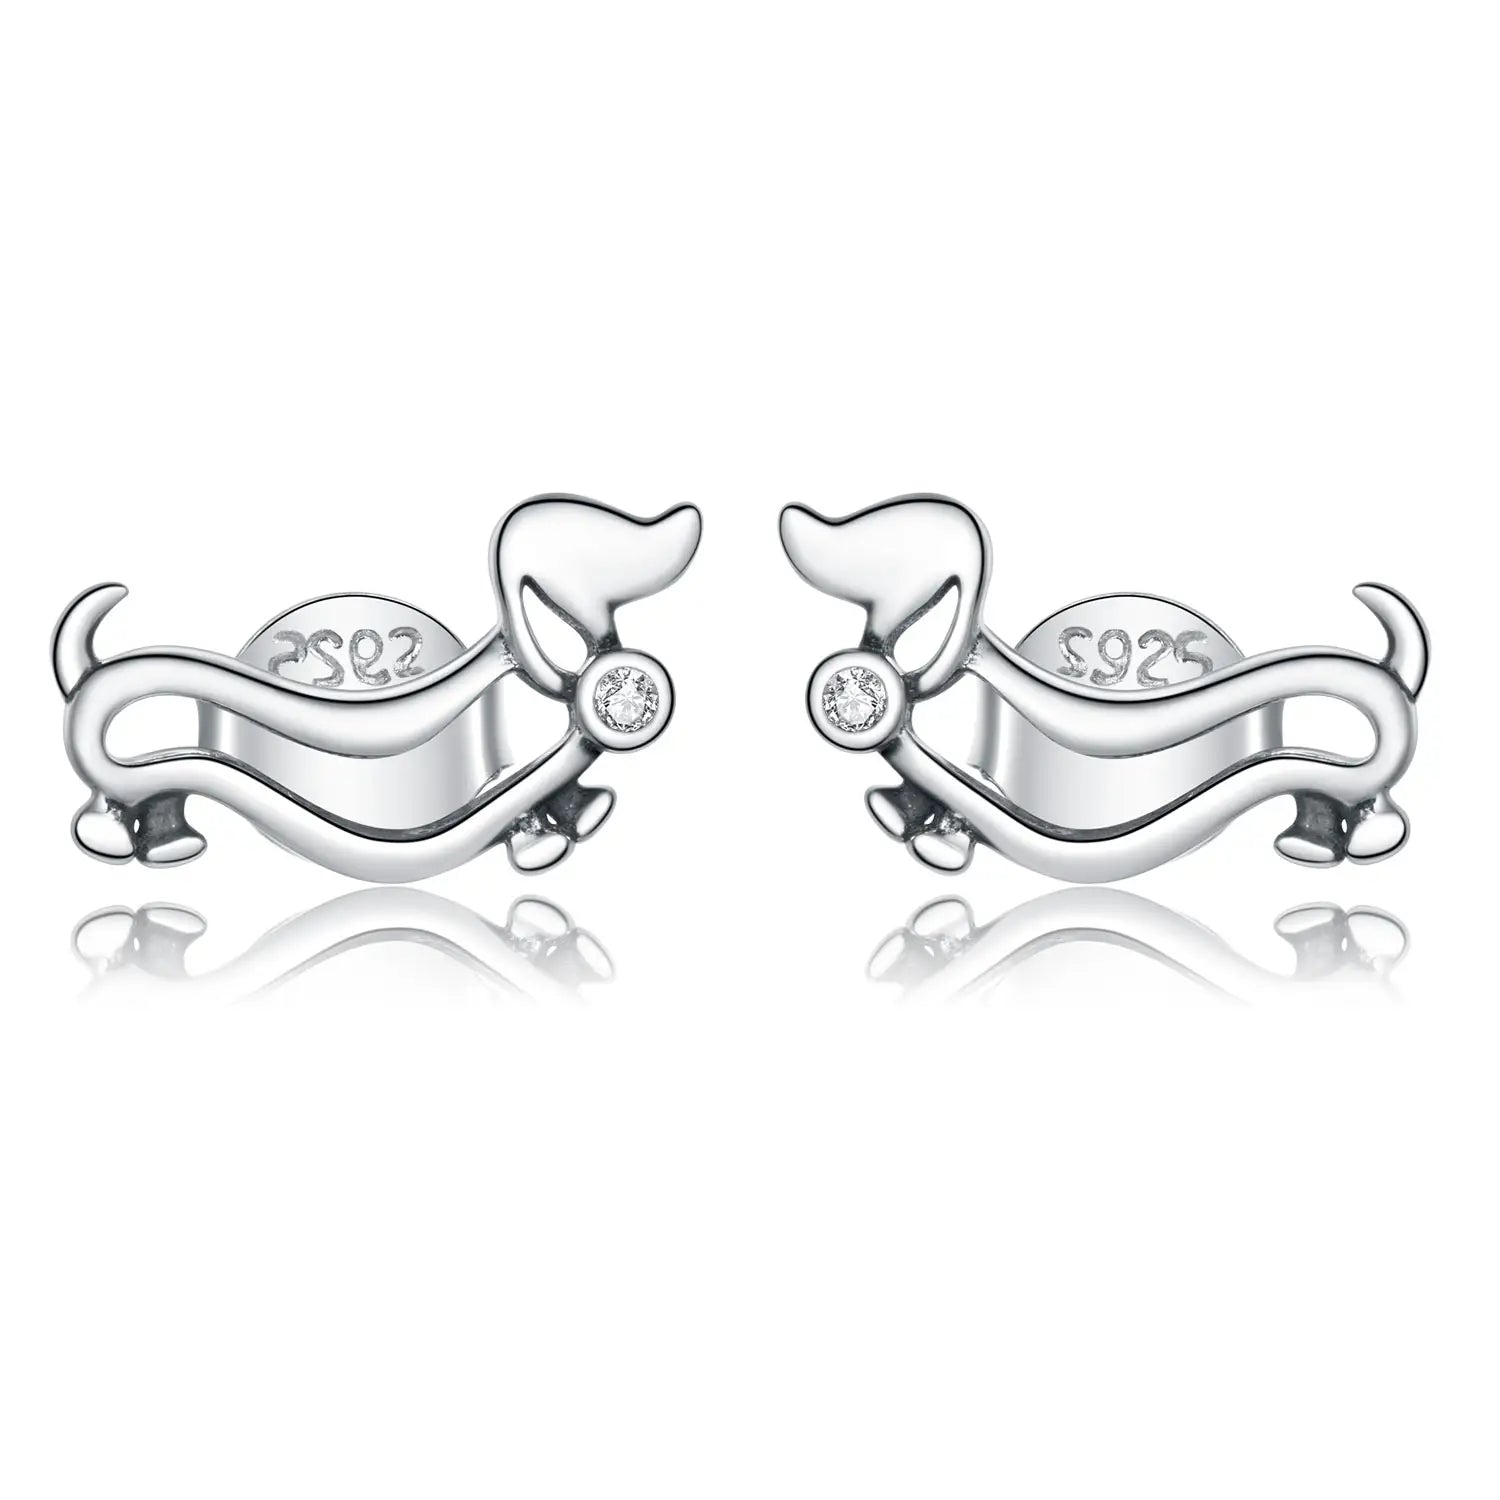 Dachshund Sterling Silver Earrings